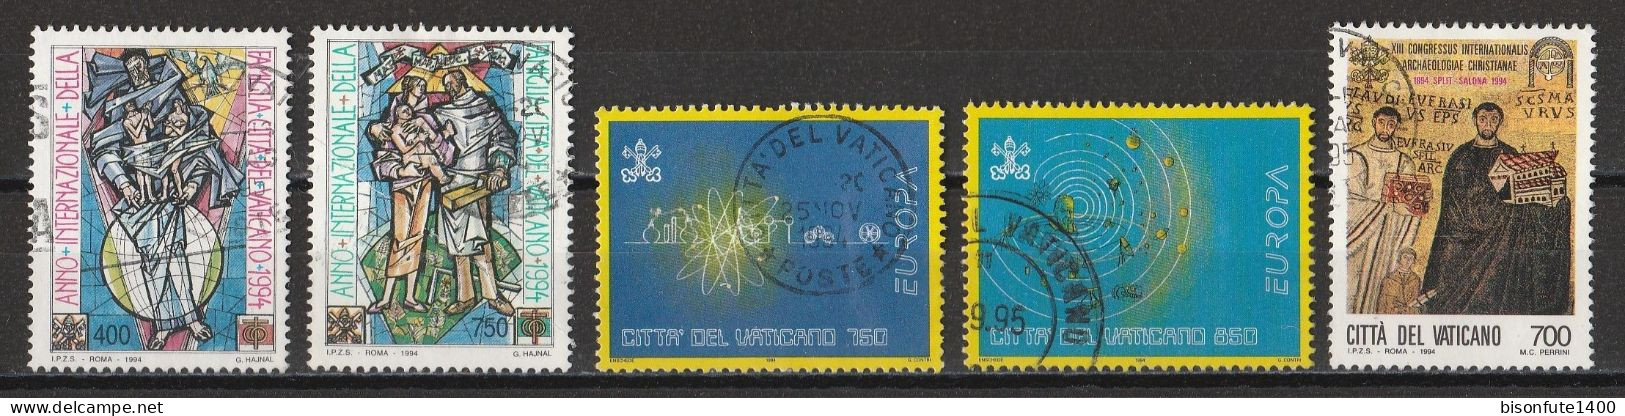 Vatican 1994 : Timbres Yvert & Tellier N° 980 - 981 - 984 - 985 - 987 - 991 - 993 - 995 - 996 Et 997 Se Tenant Et Oblit. - Used Stamps